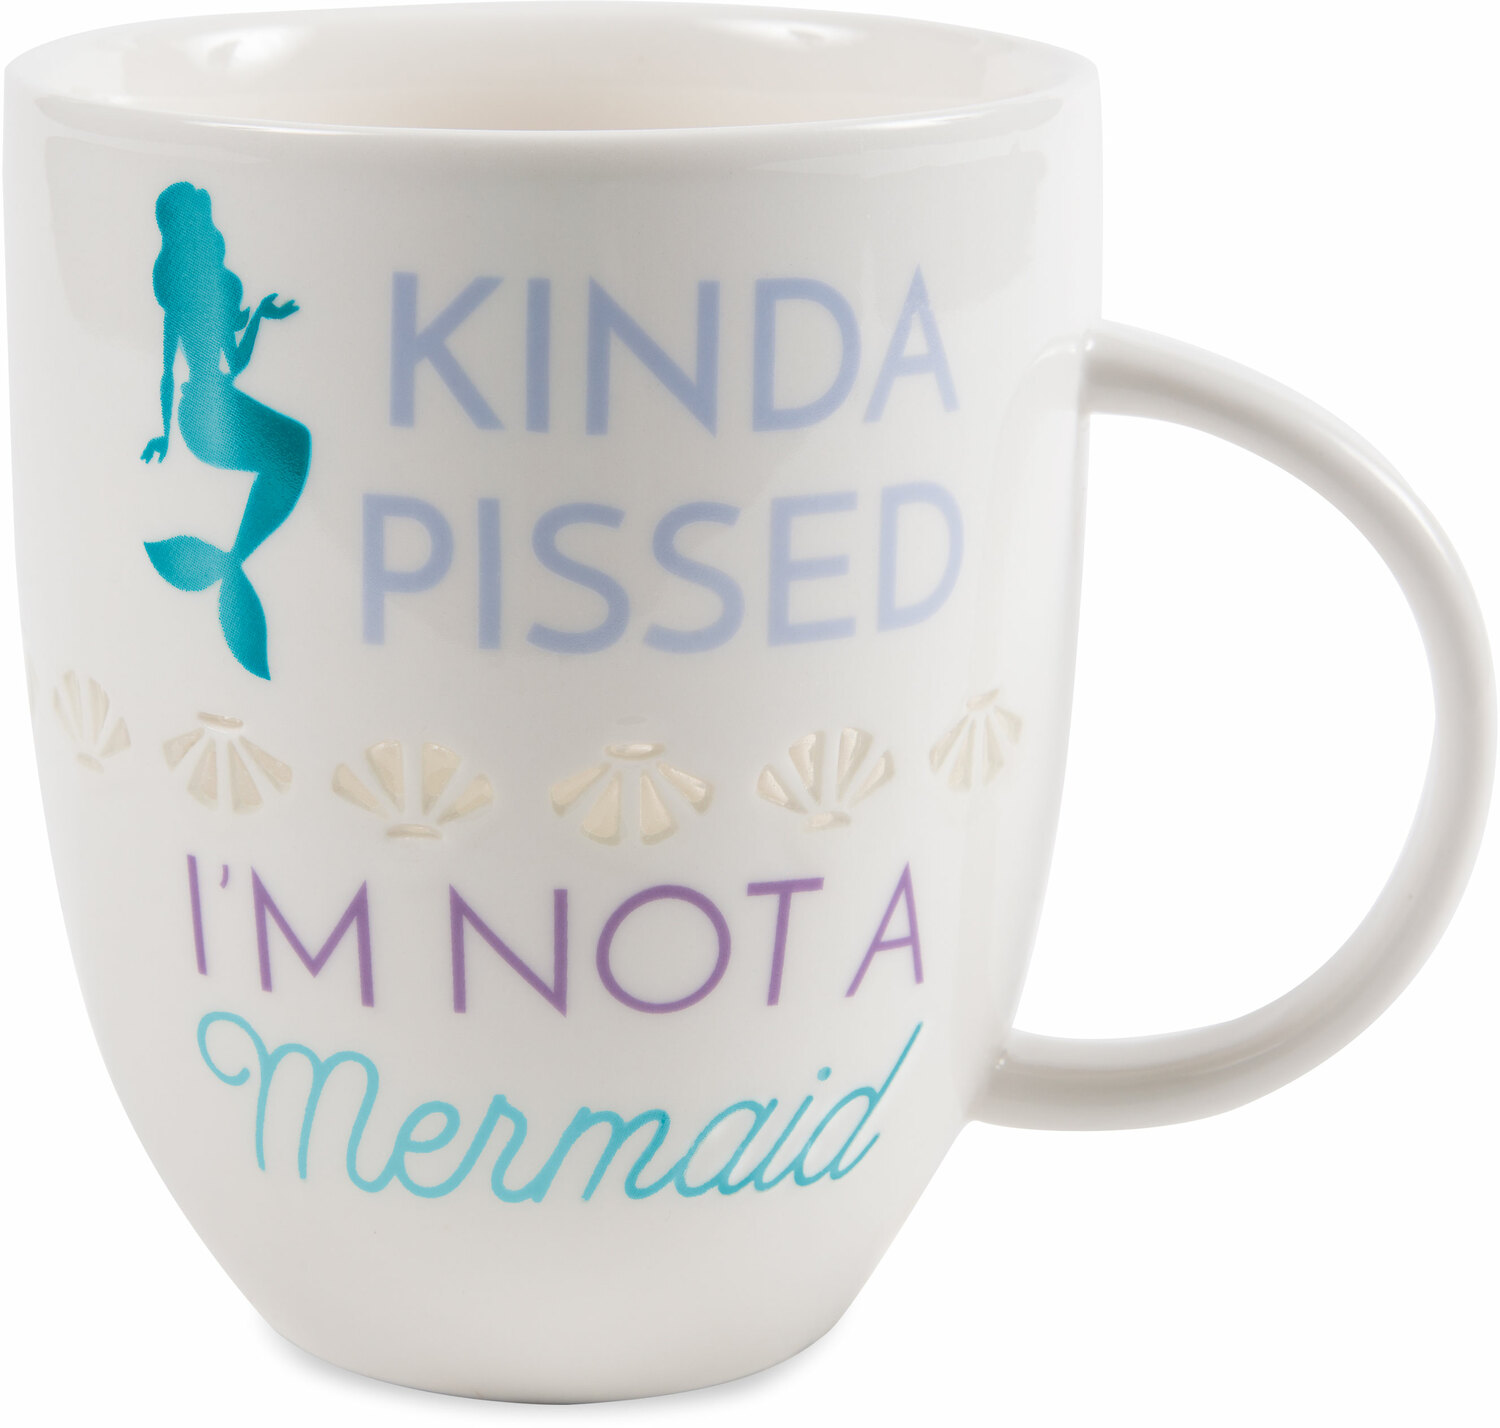 Kinda Pissed by My Kinda Girl - Kinda Pissed - 24 oz Pierced Porcelain Cup